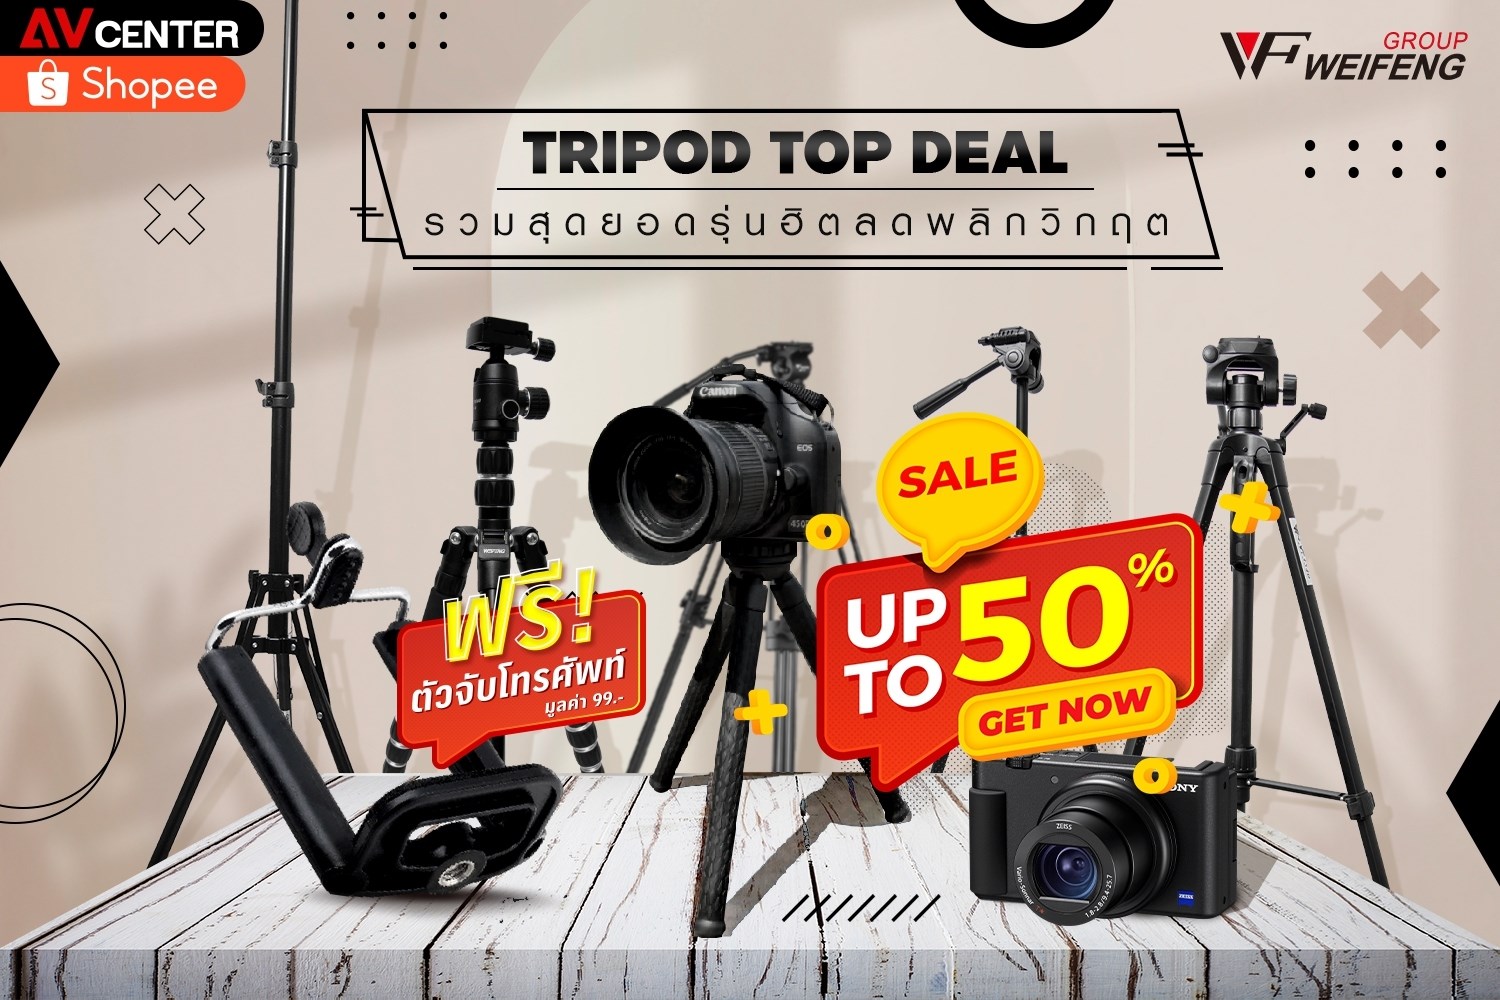 Tripod top deal รวมสุดยอดขาตั้งกล้องรุ่นฮิต ลดพลิกวิกฤตกาล